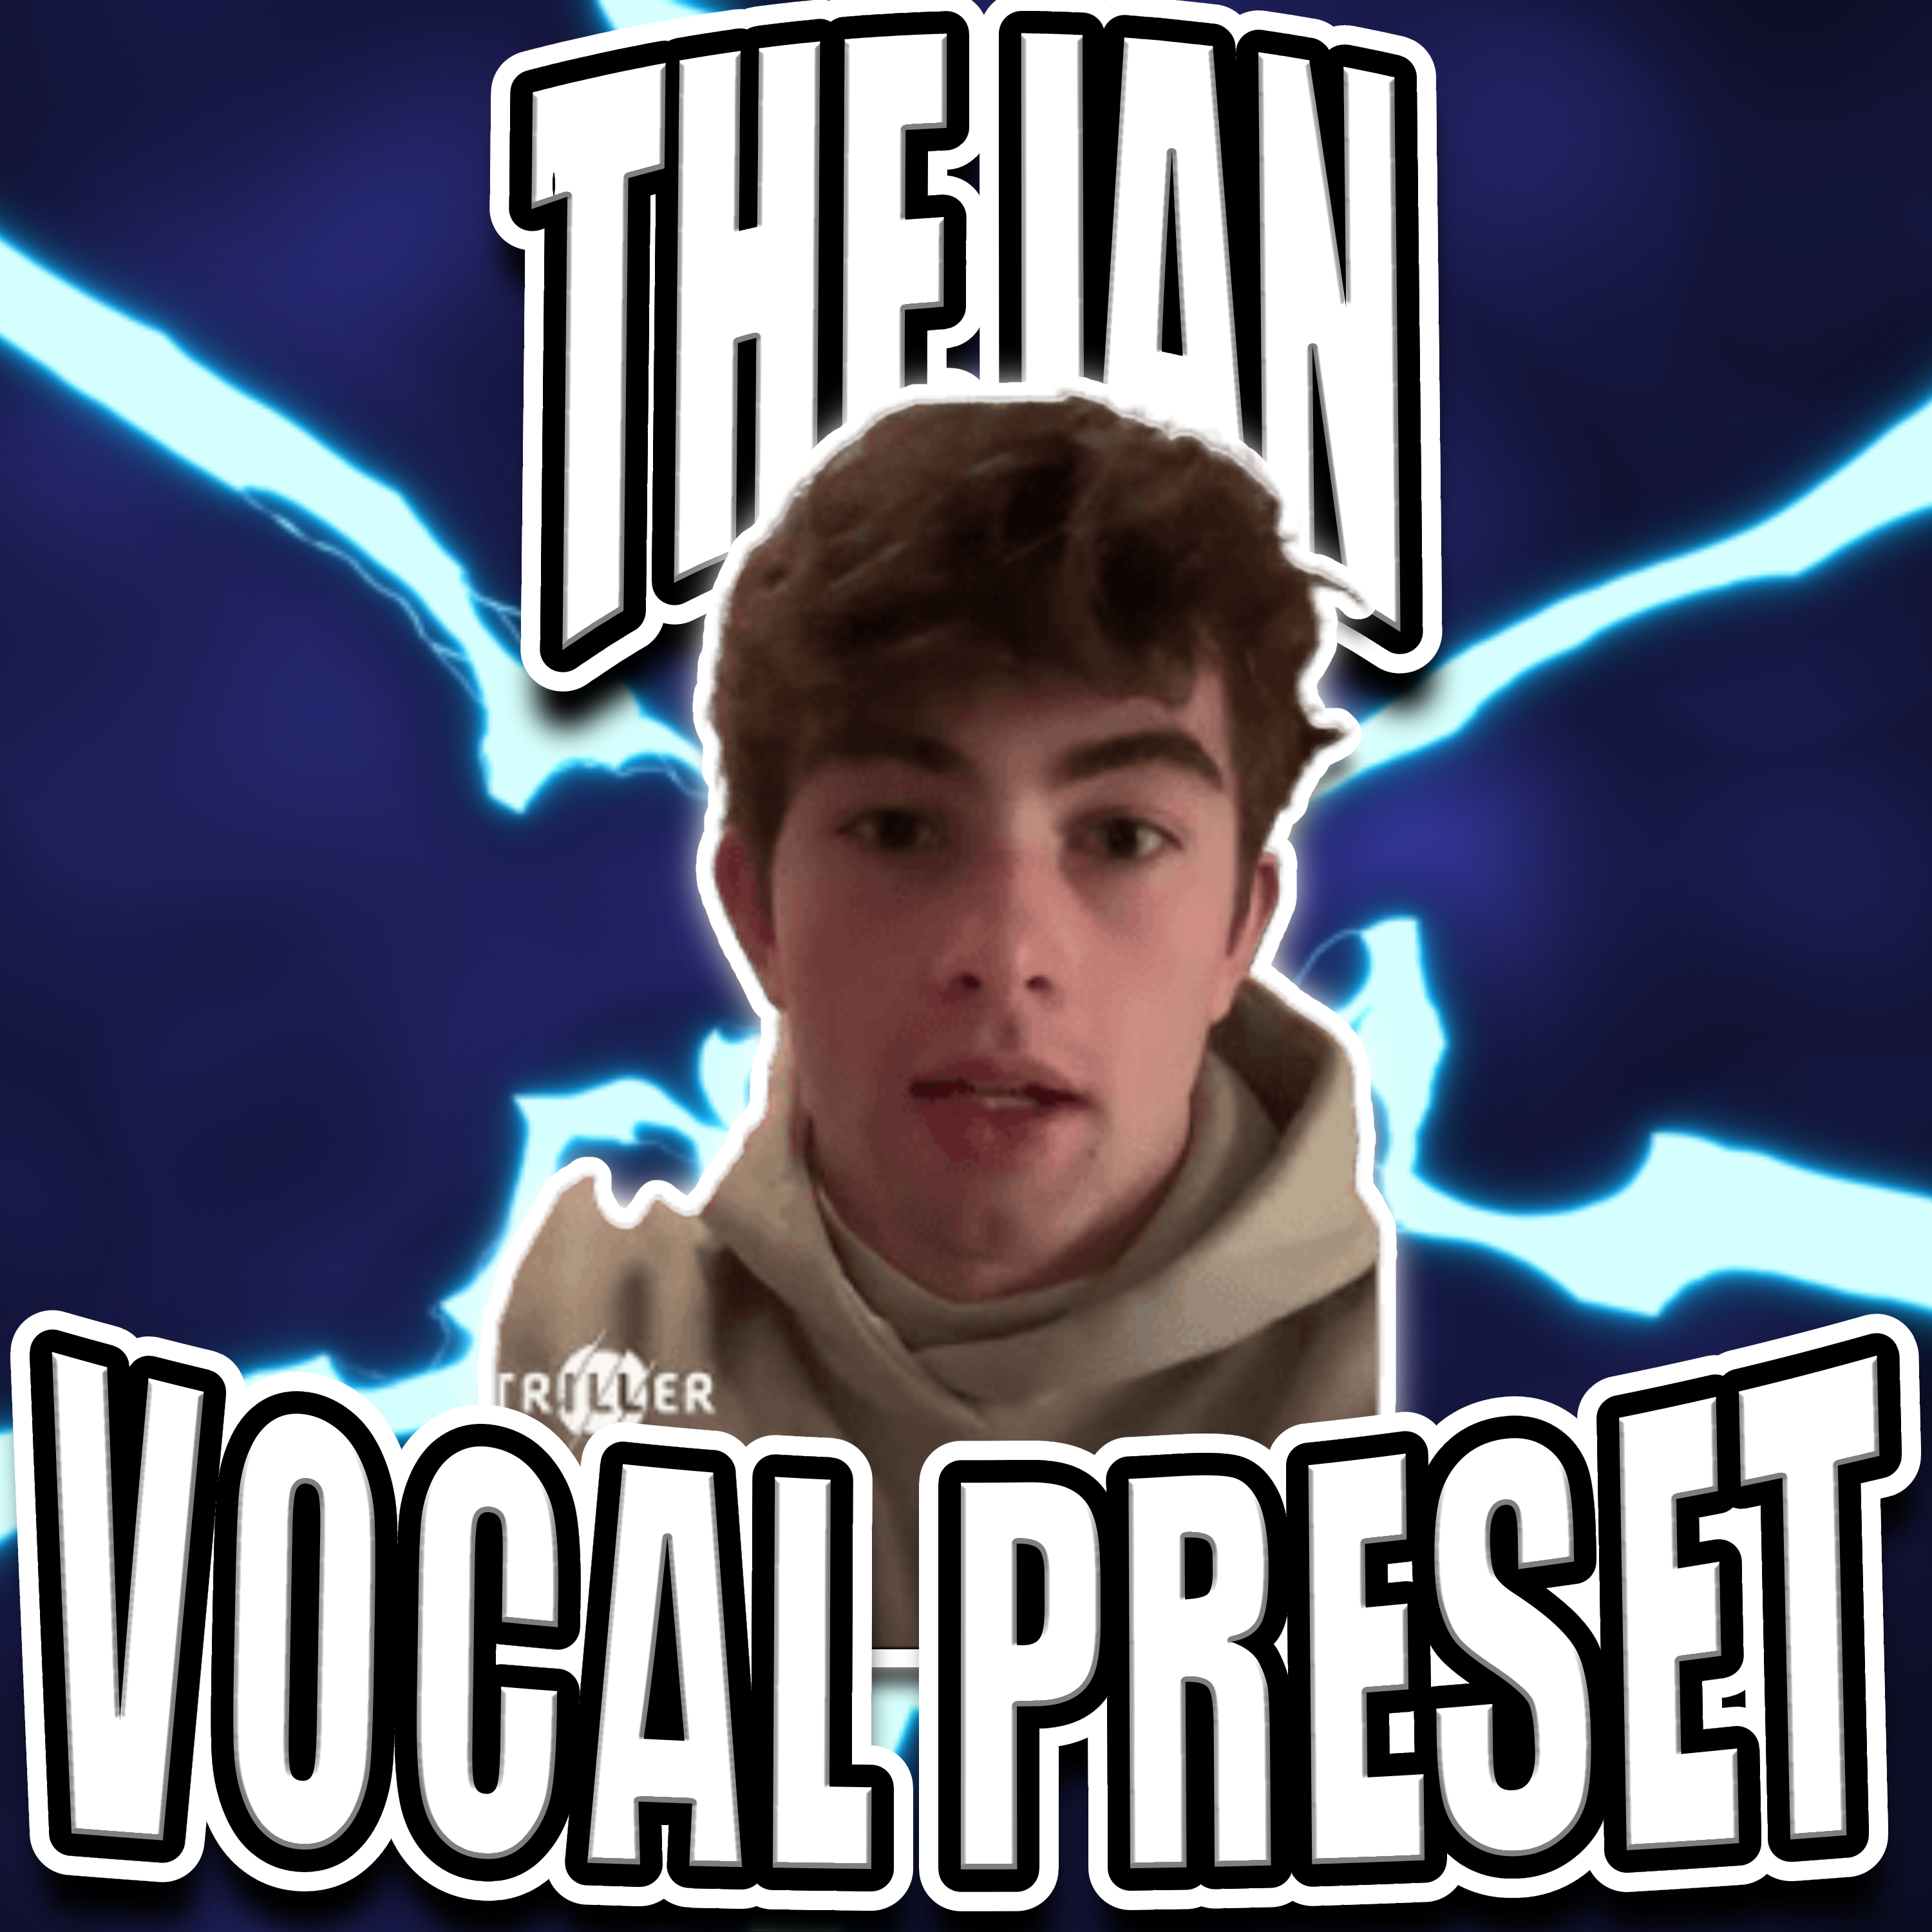 Ian Vocal Preset